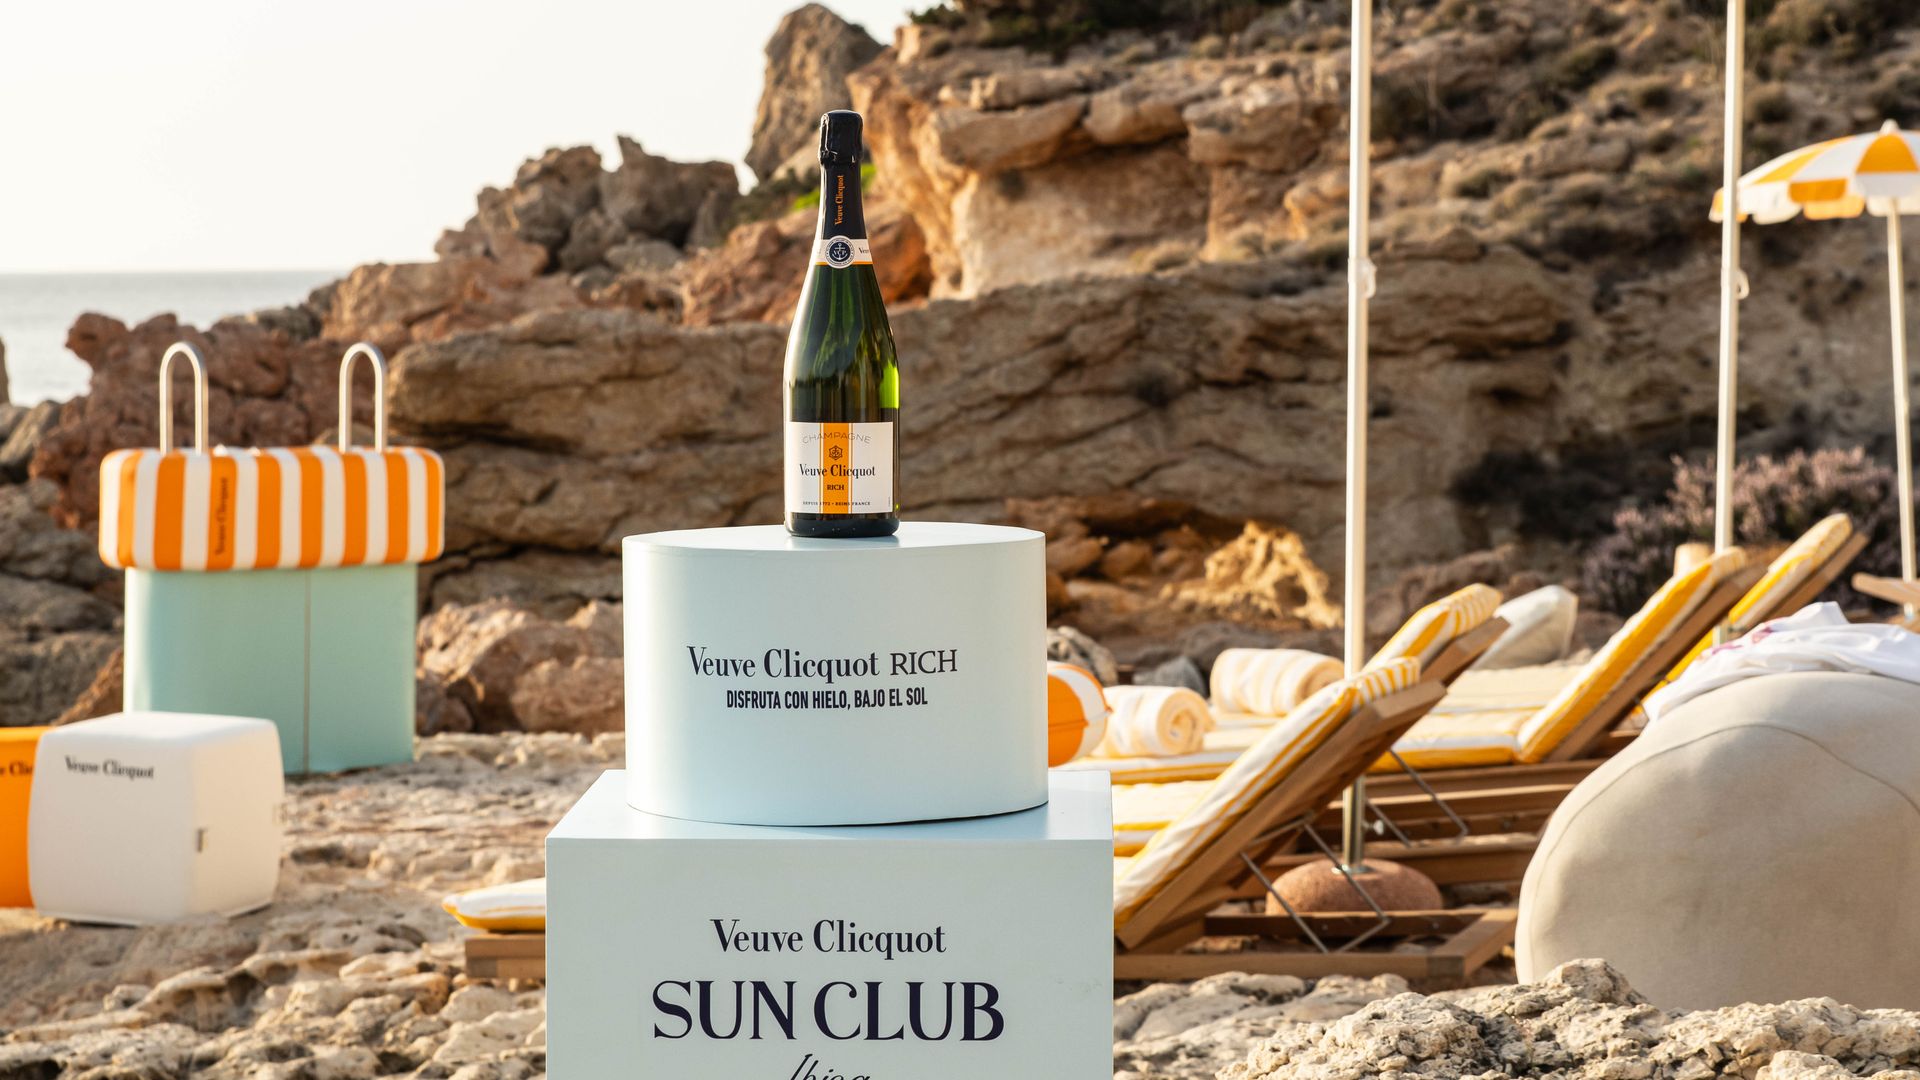 Visita el Sun Club de Veuve Clicquot en Ibiza